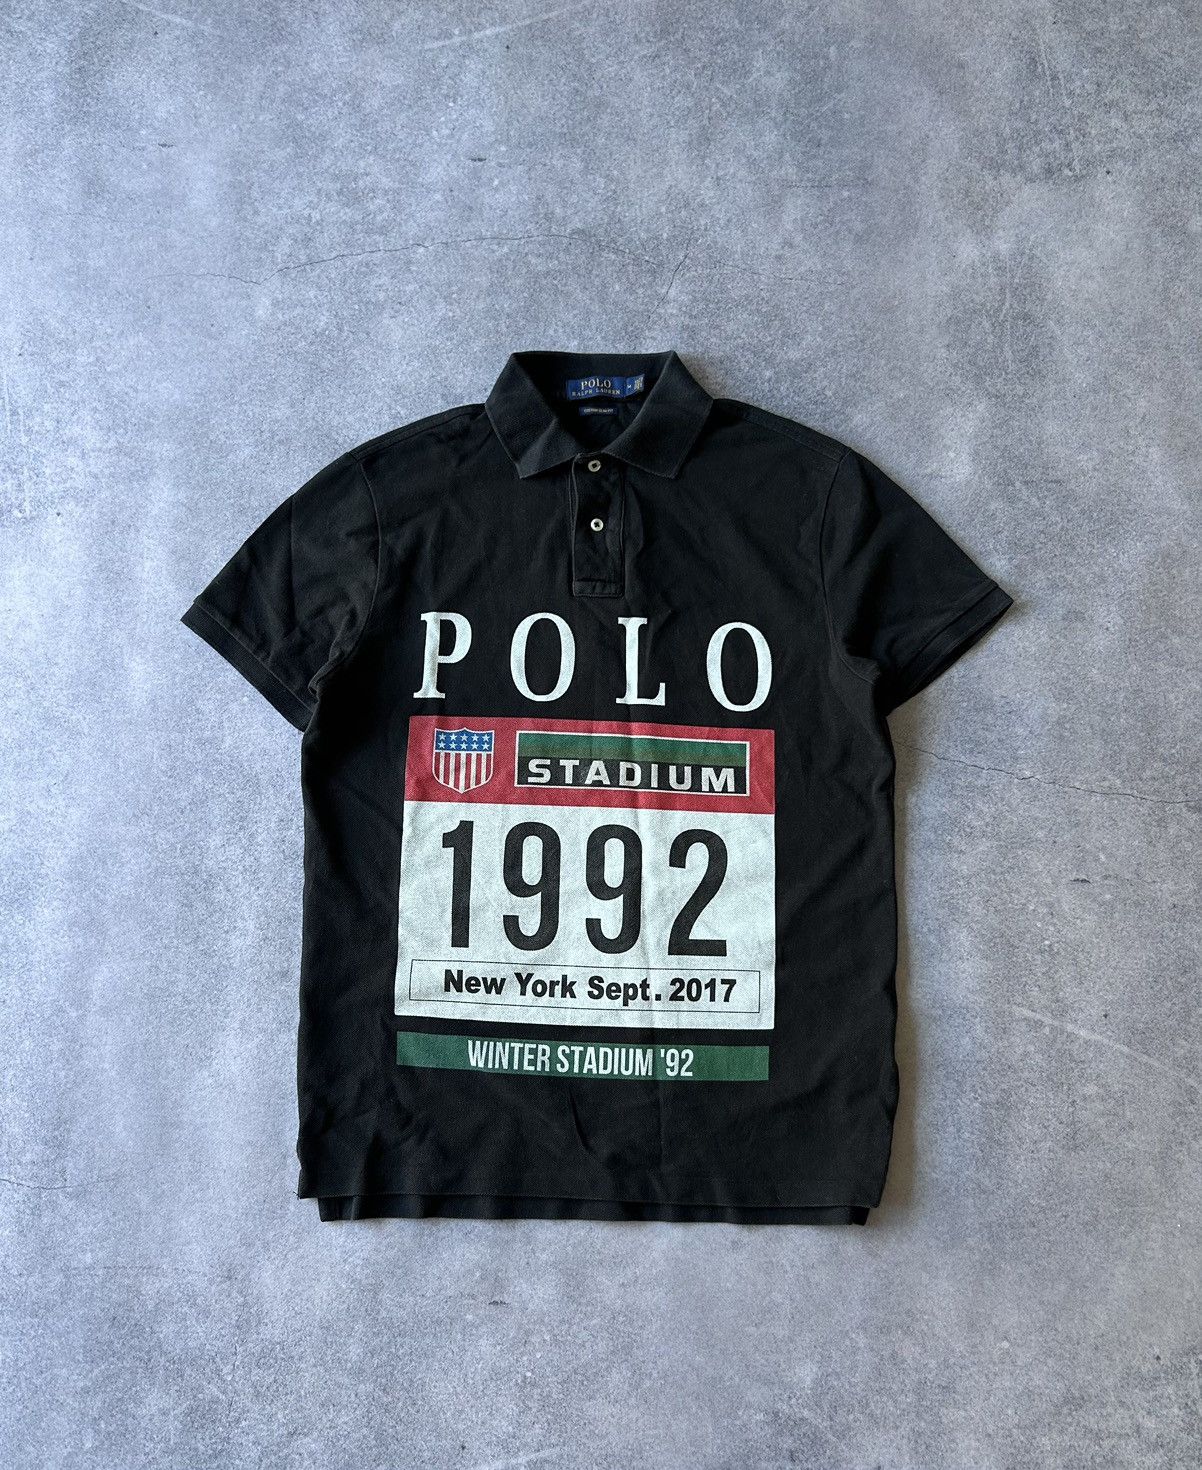 Polo Ralph Lauren Stadium 1992 | Grailed